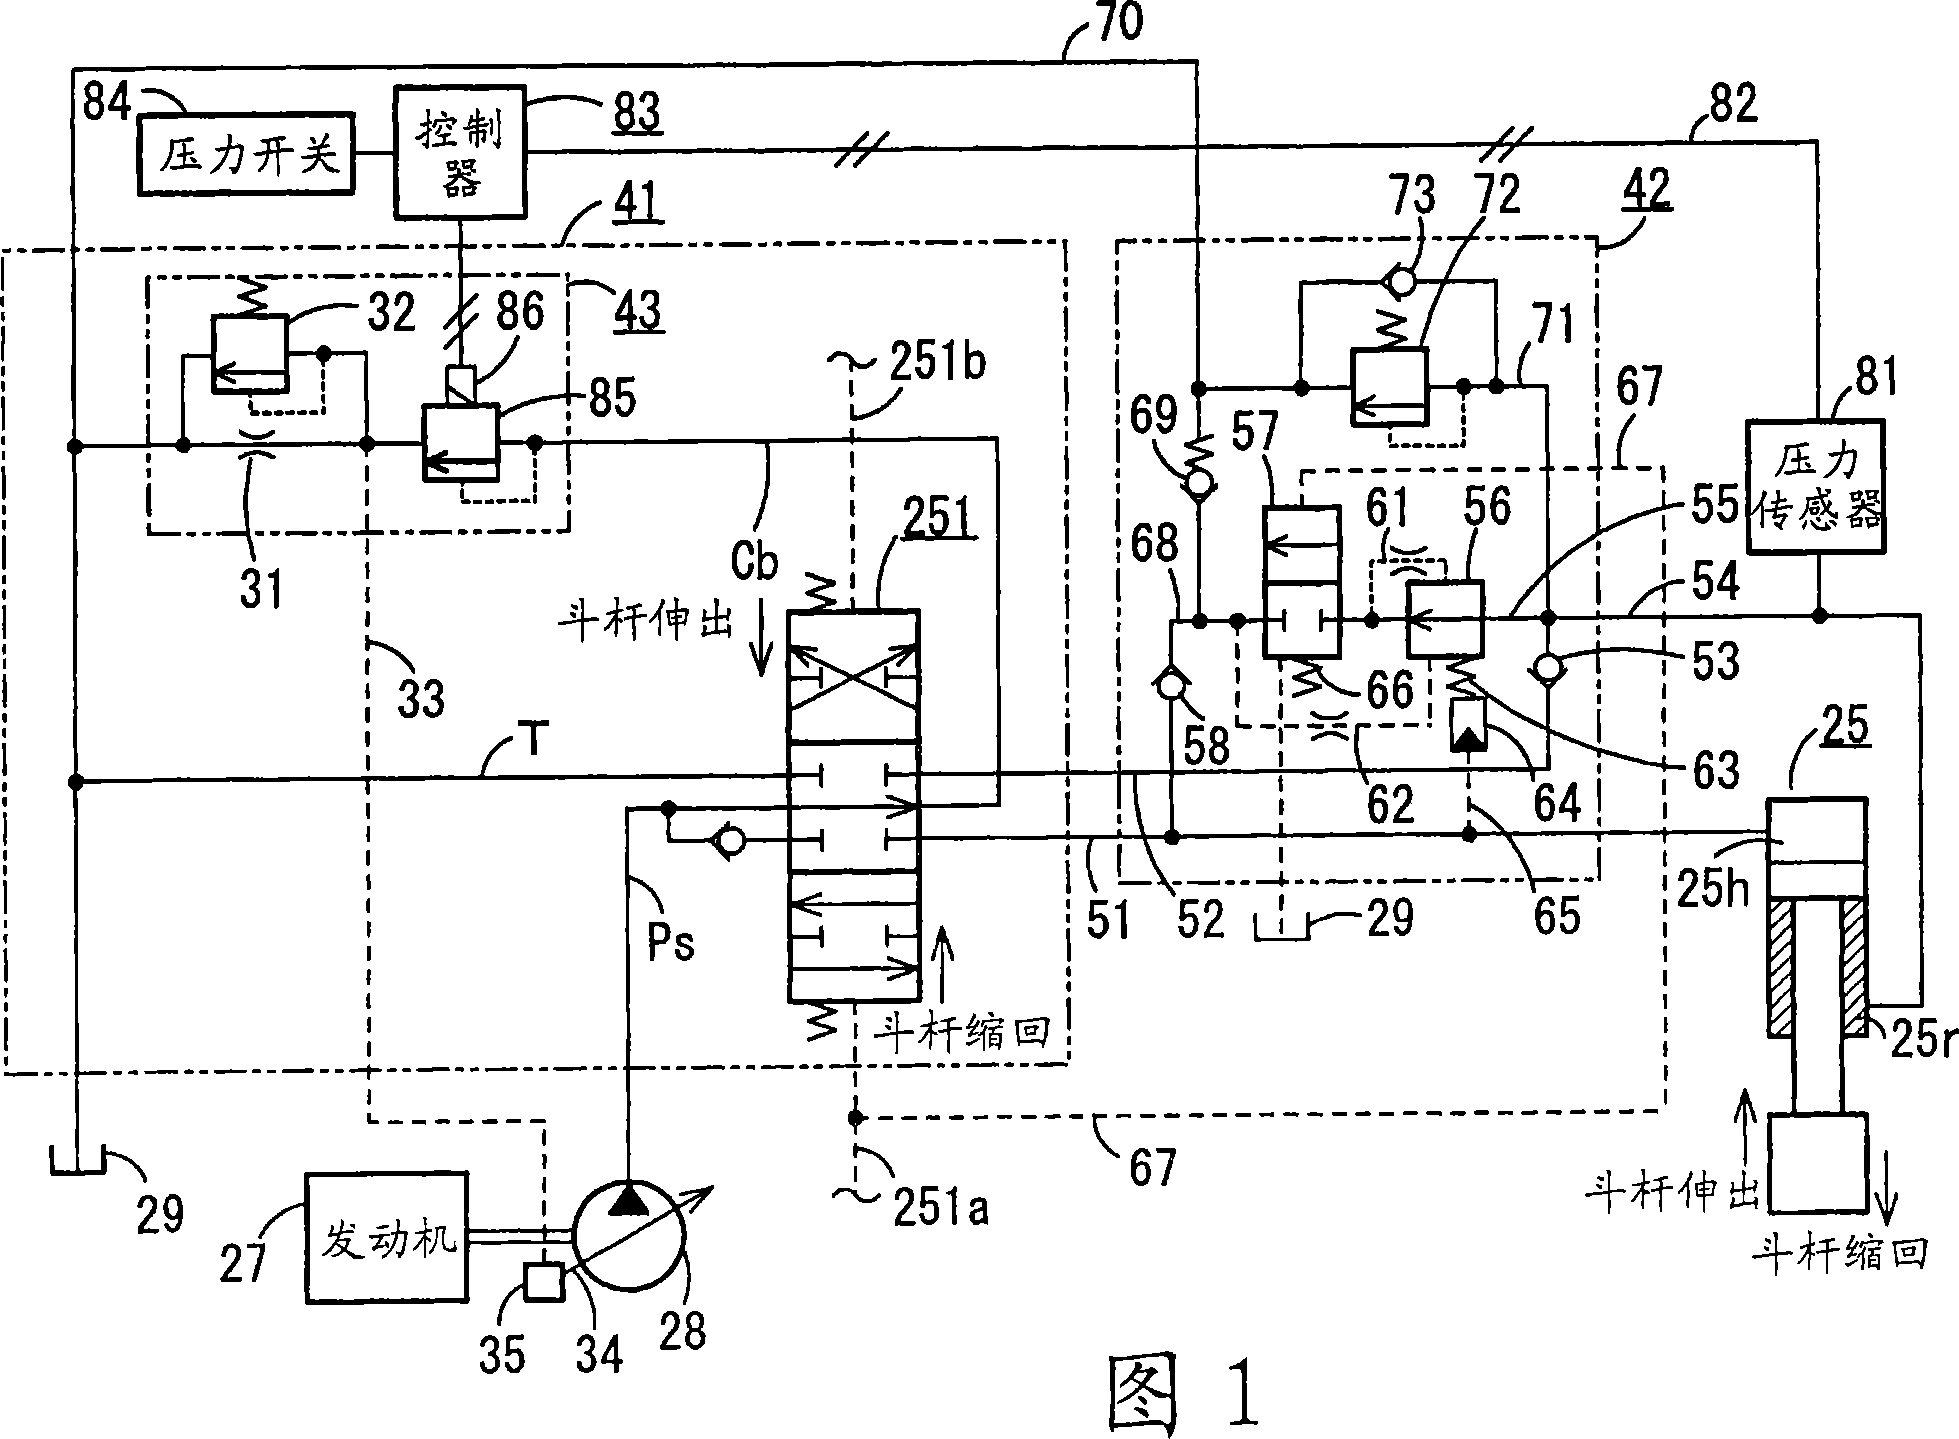 Control circuit of construction machine